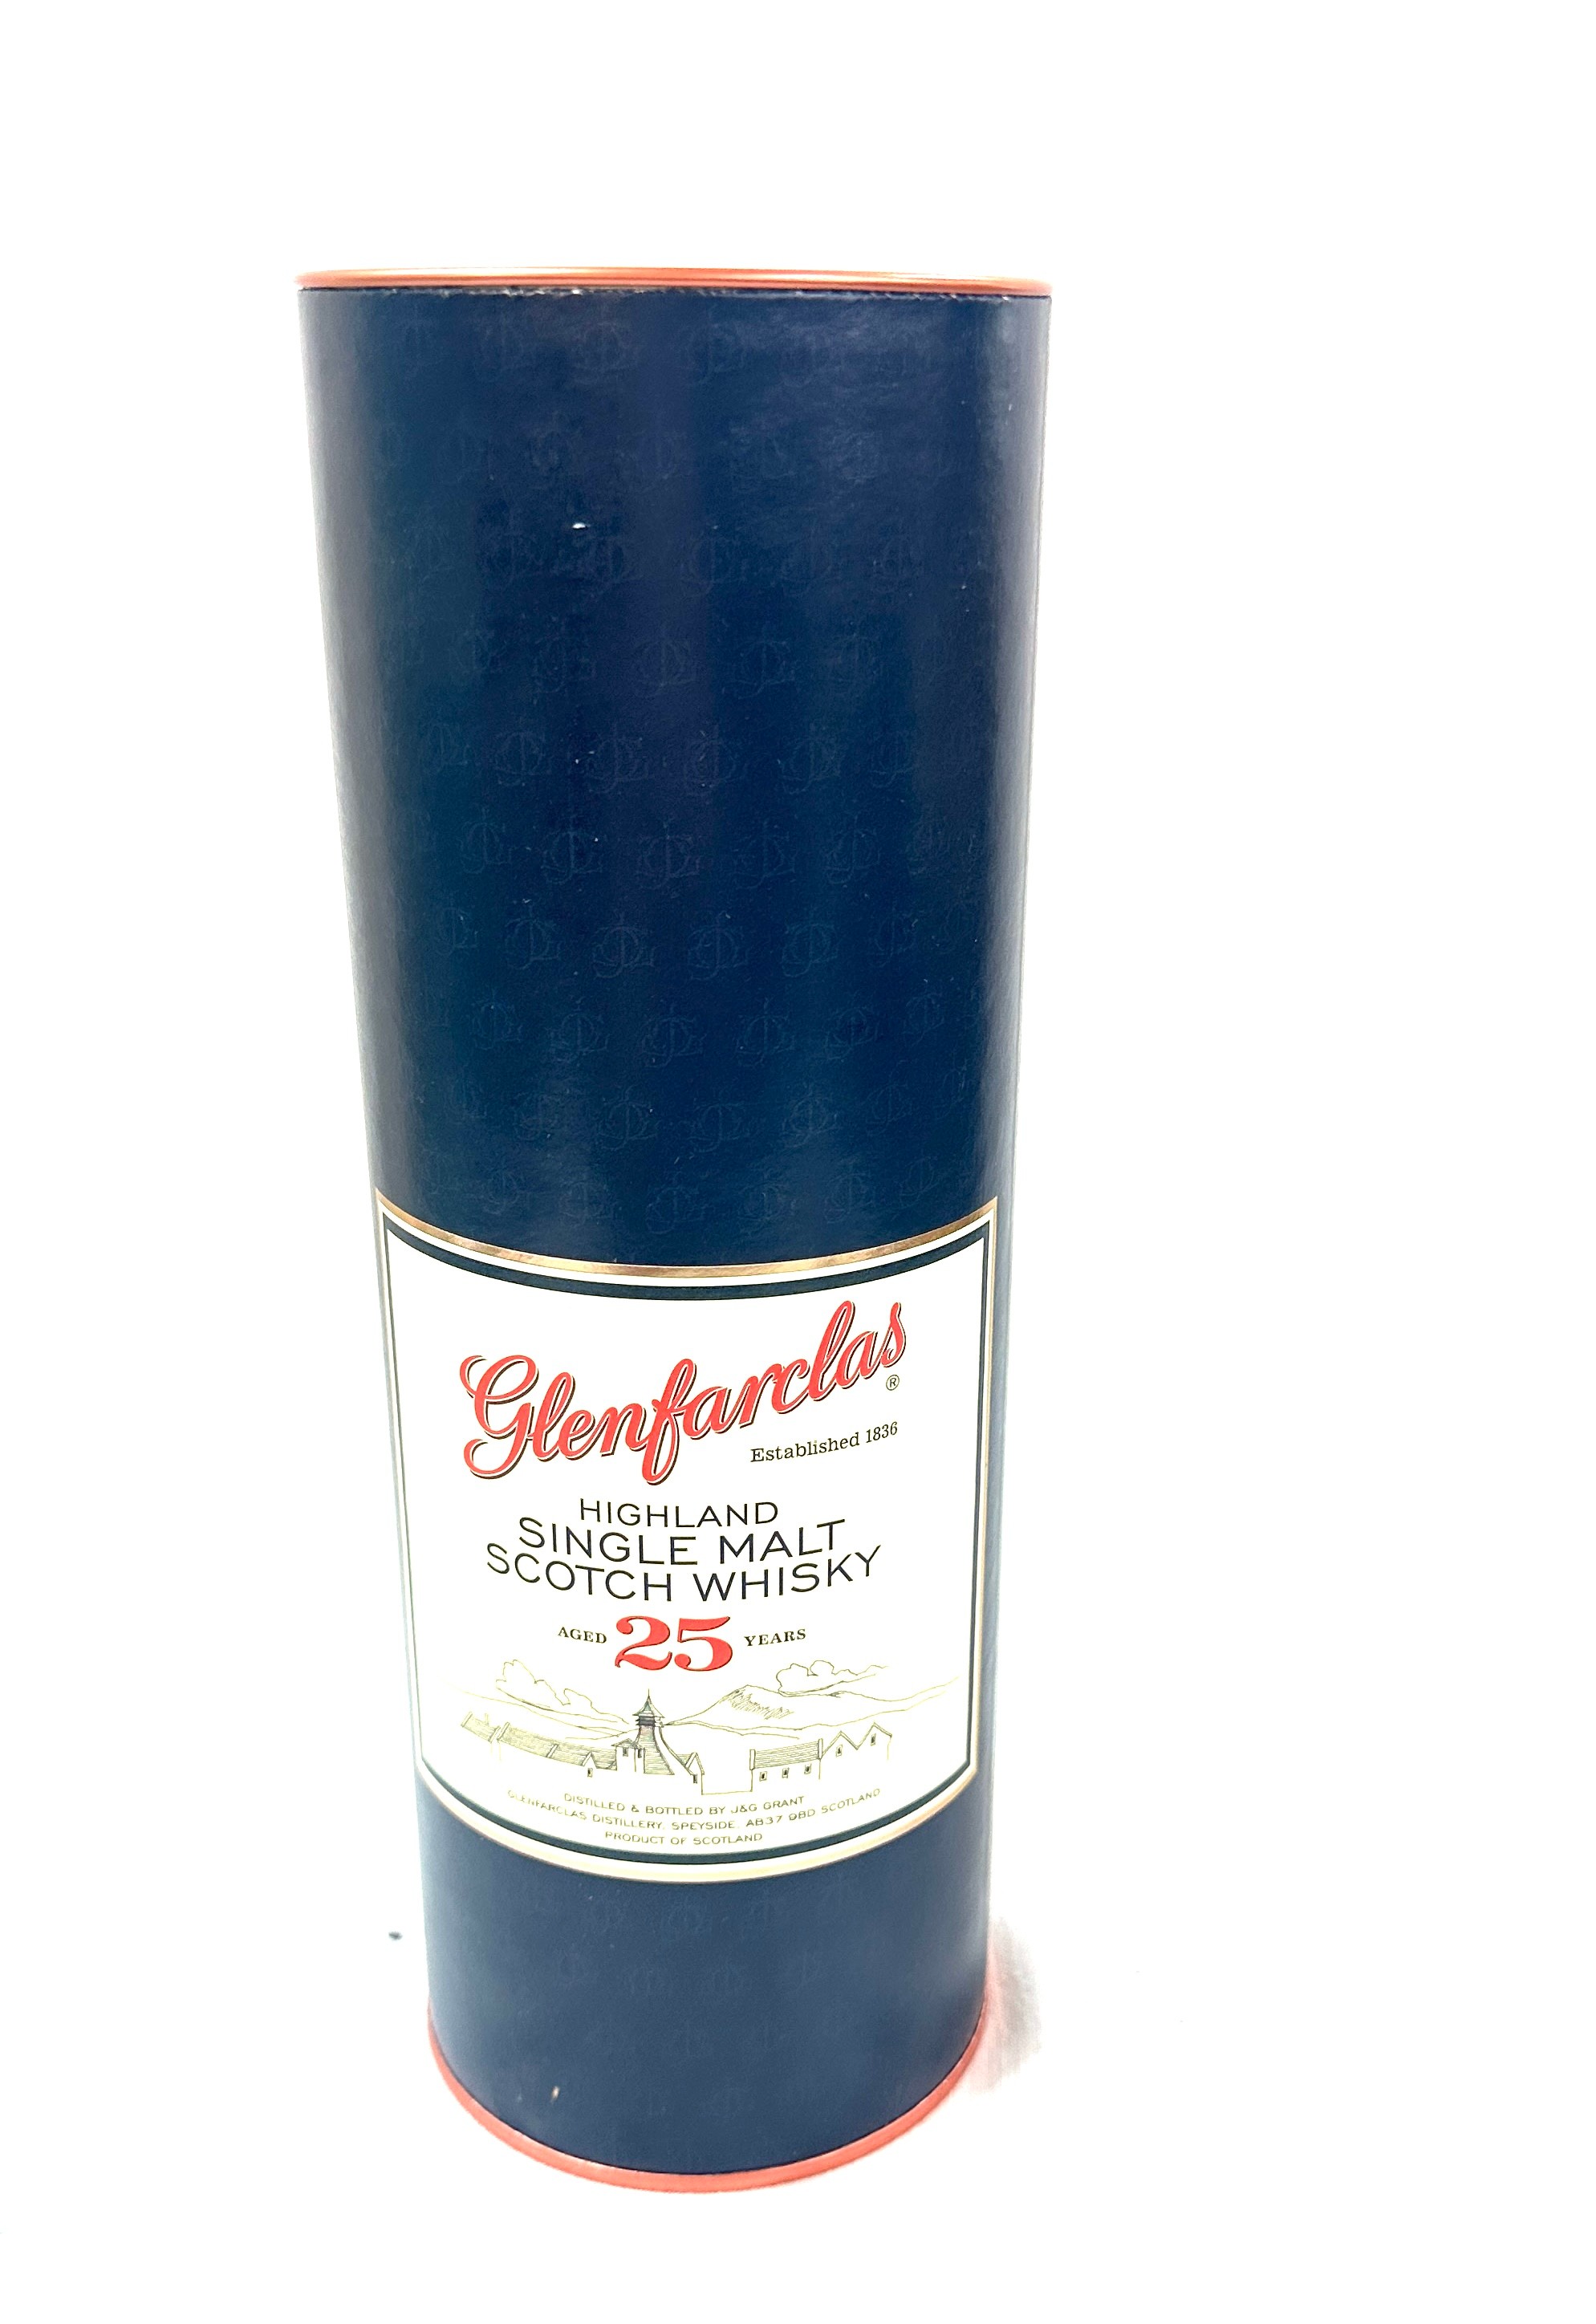 Glenfarclas single malt scotch whisky aged 25 year, 43% 700ml - Bild 2 aus 5